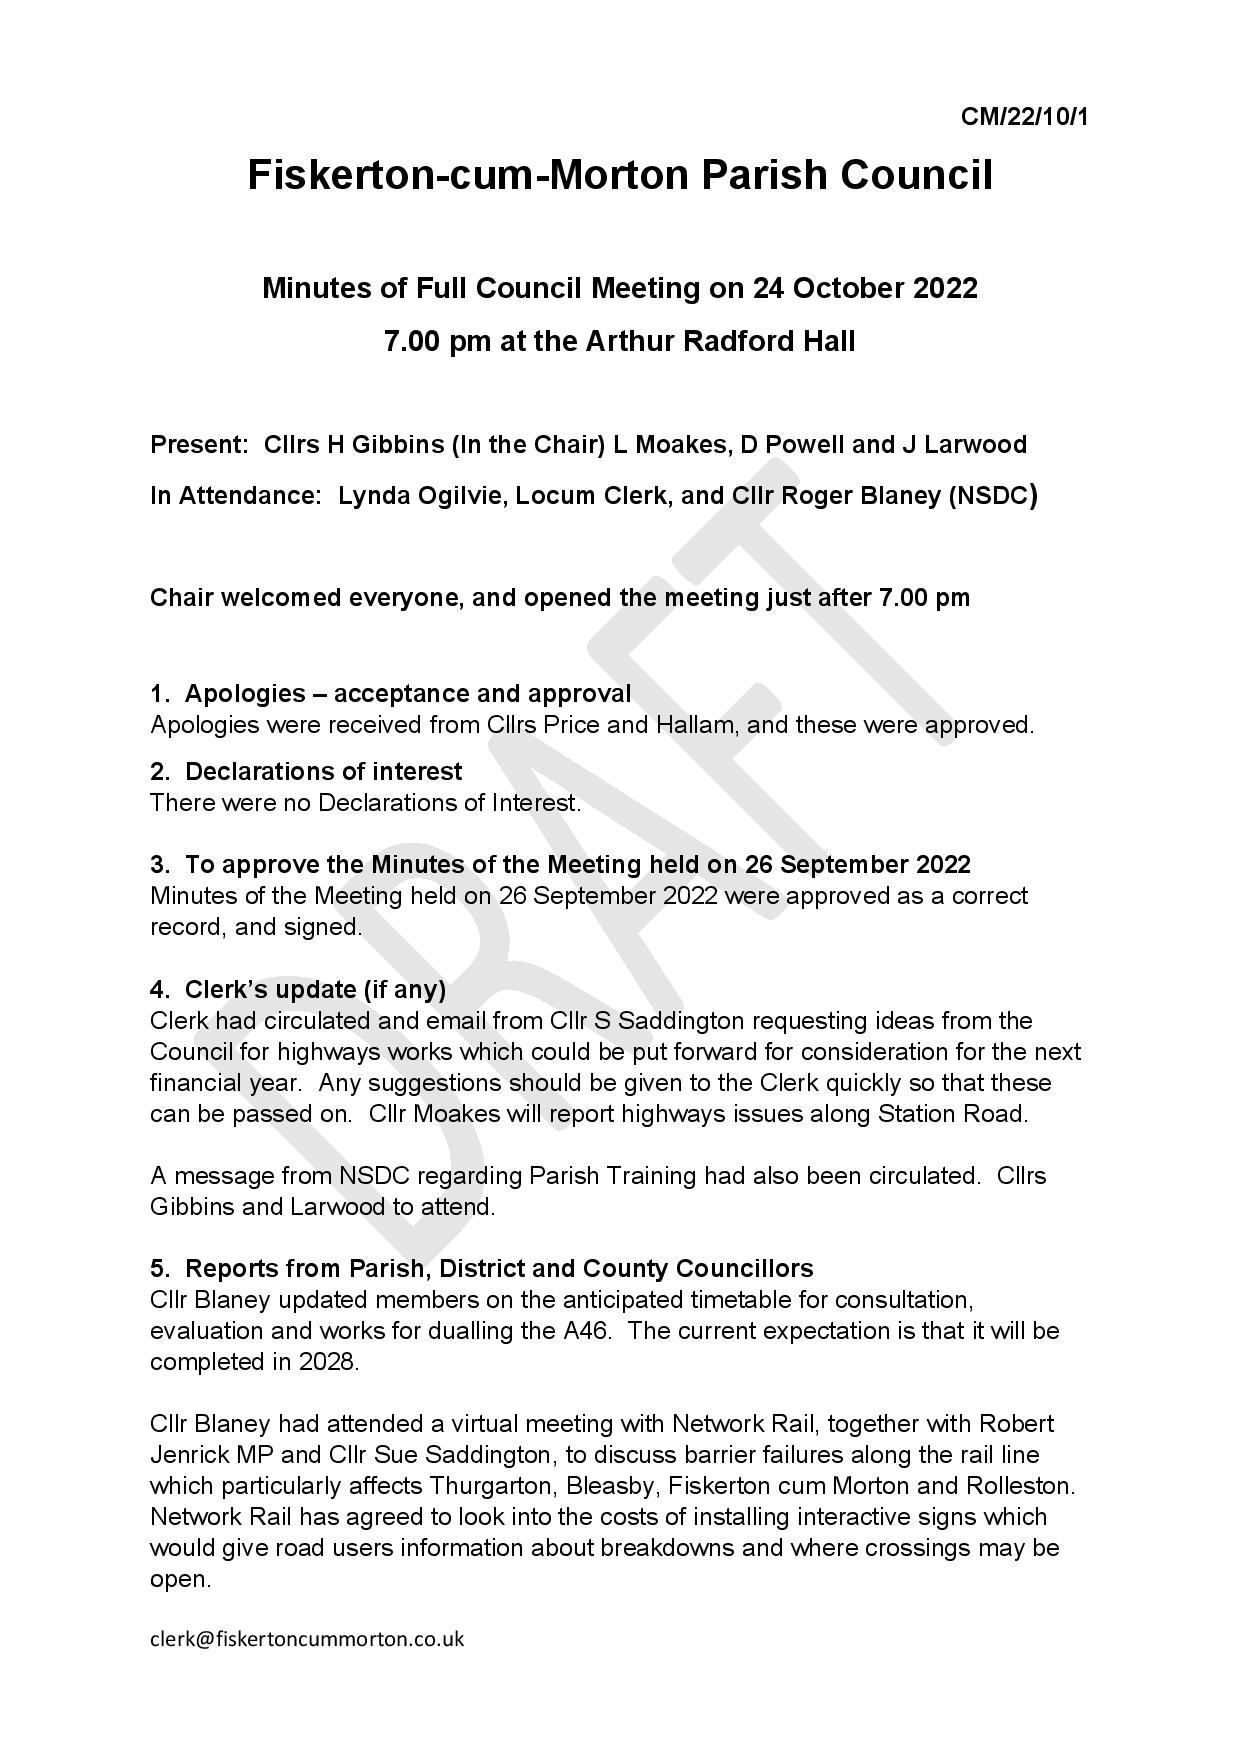 Fiskerton-cum-Morton Parish Council Draft Minutes Oct 22